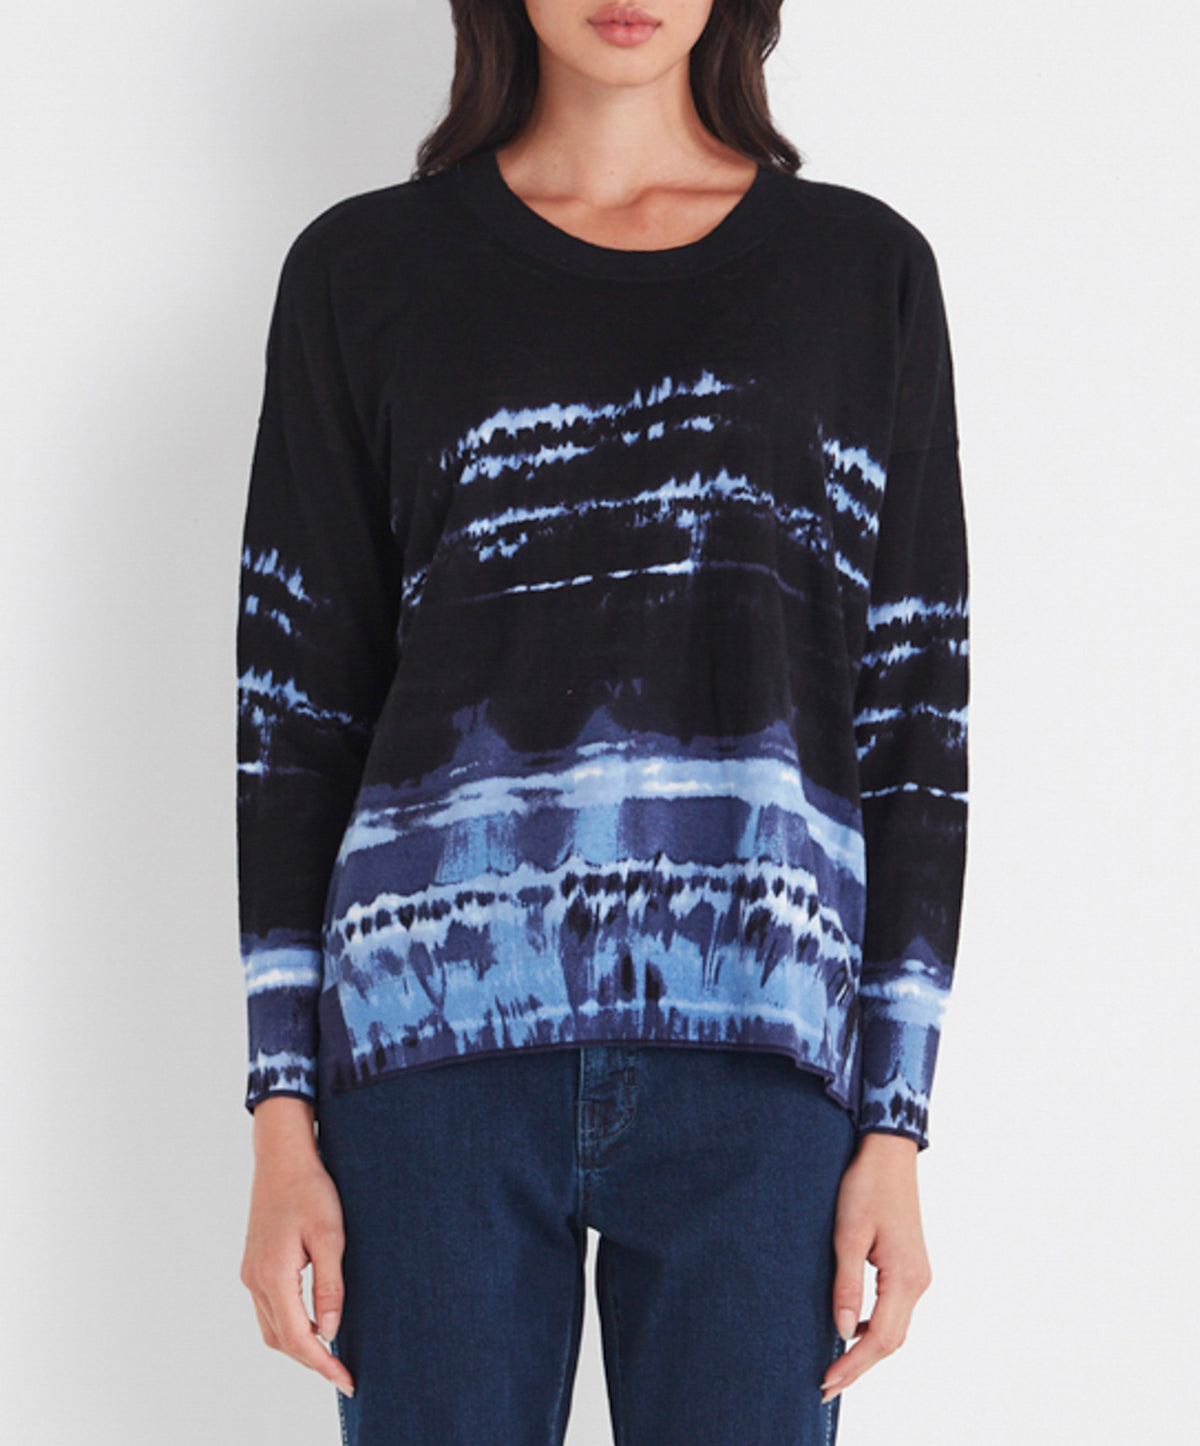 Visual Sweater